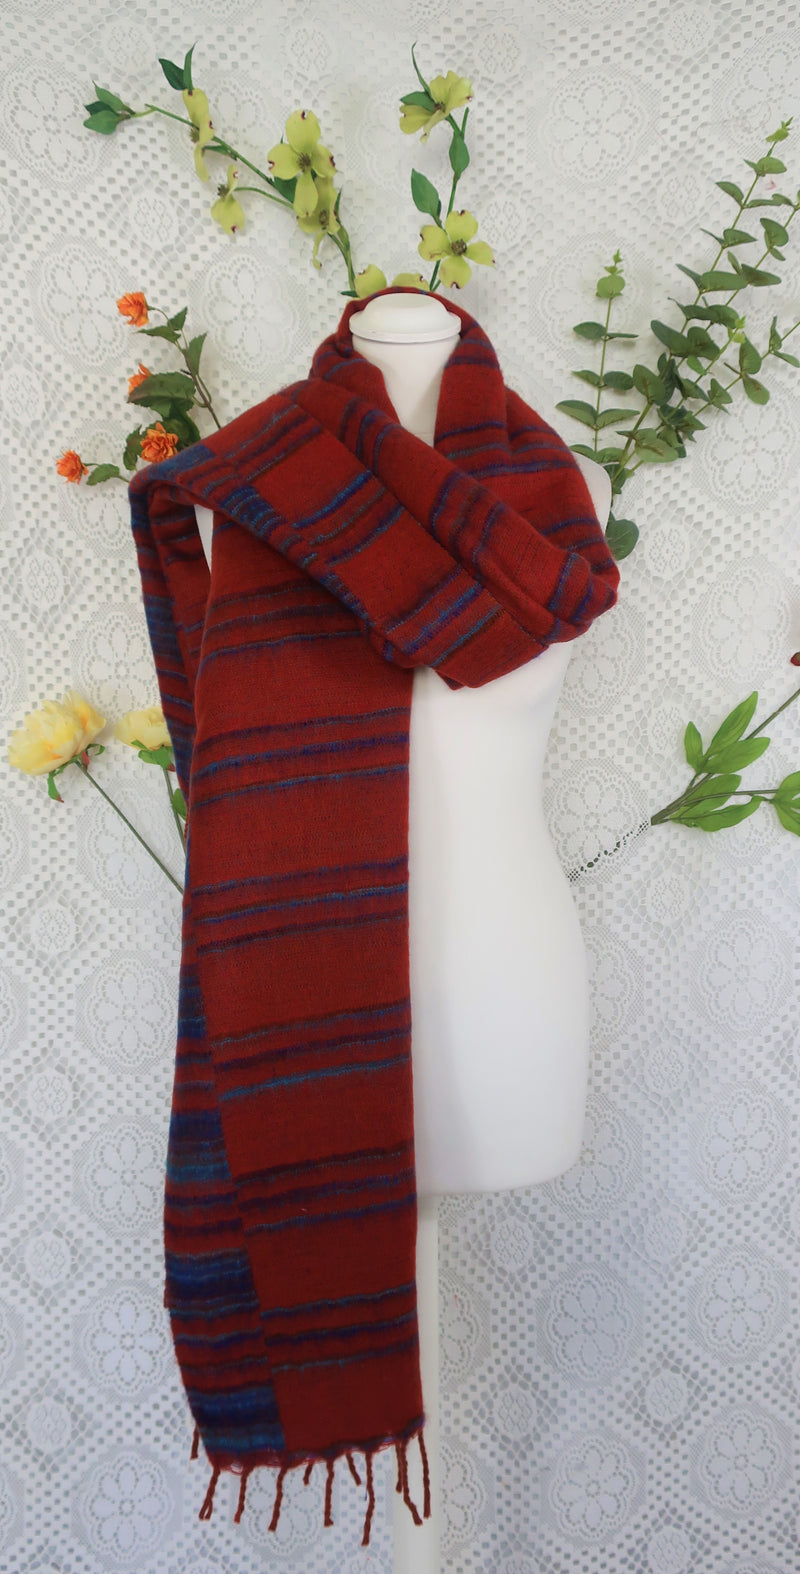 Brick Red, Cerulean & Lapis Striped Indian Shawl/Blanket